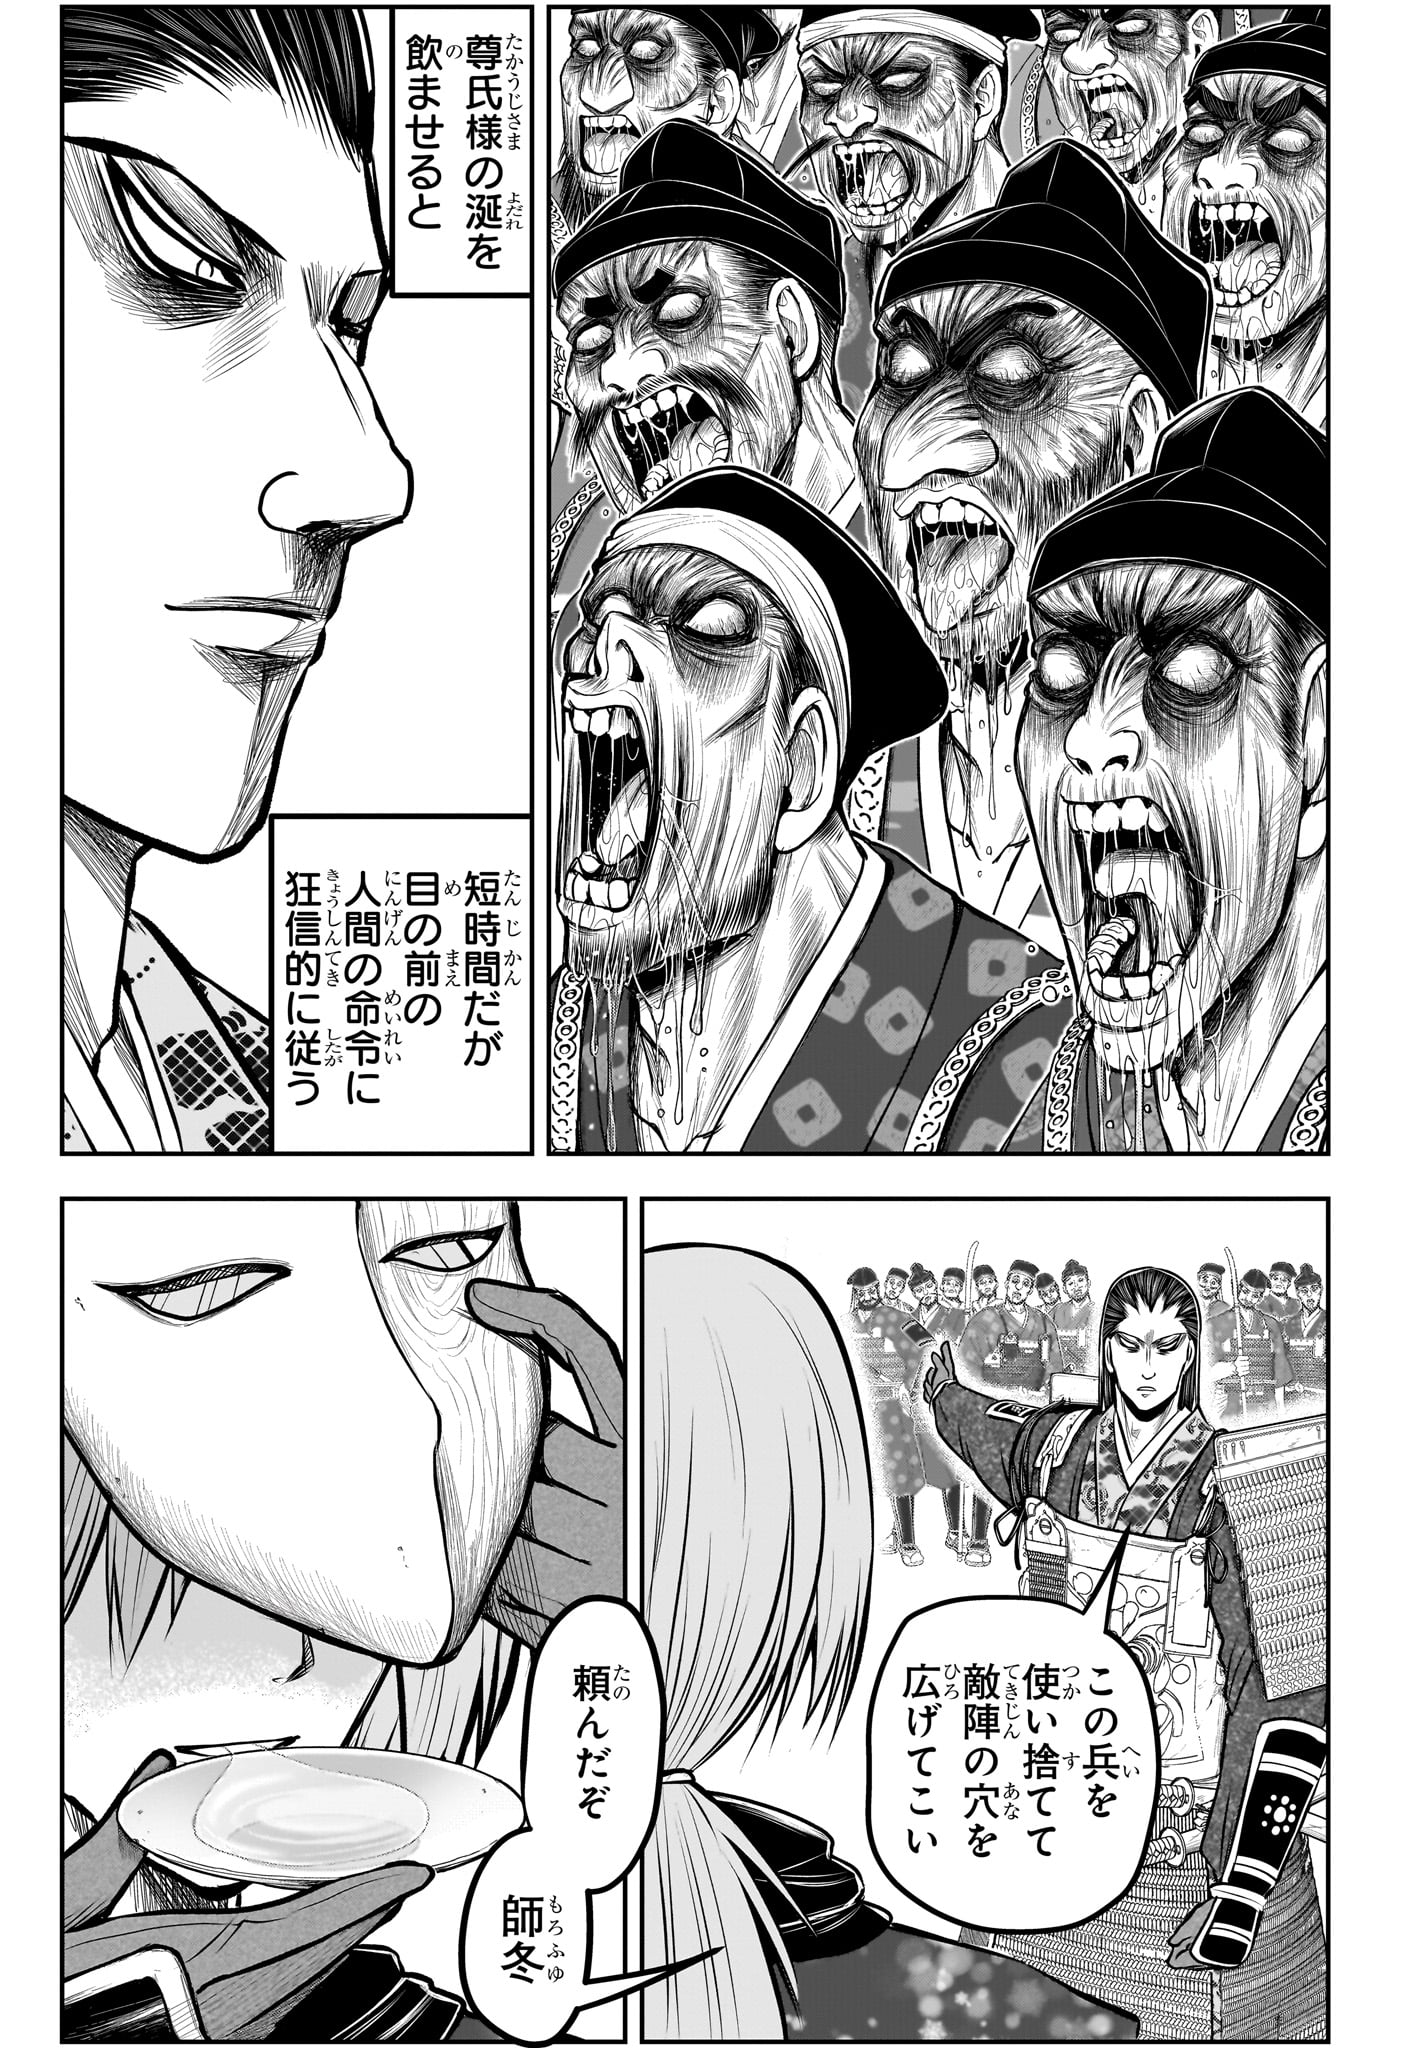 Nige Jouzu no Wakagimi - Chapter 159 - Page 13